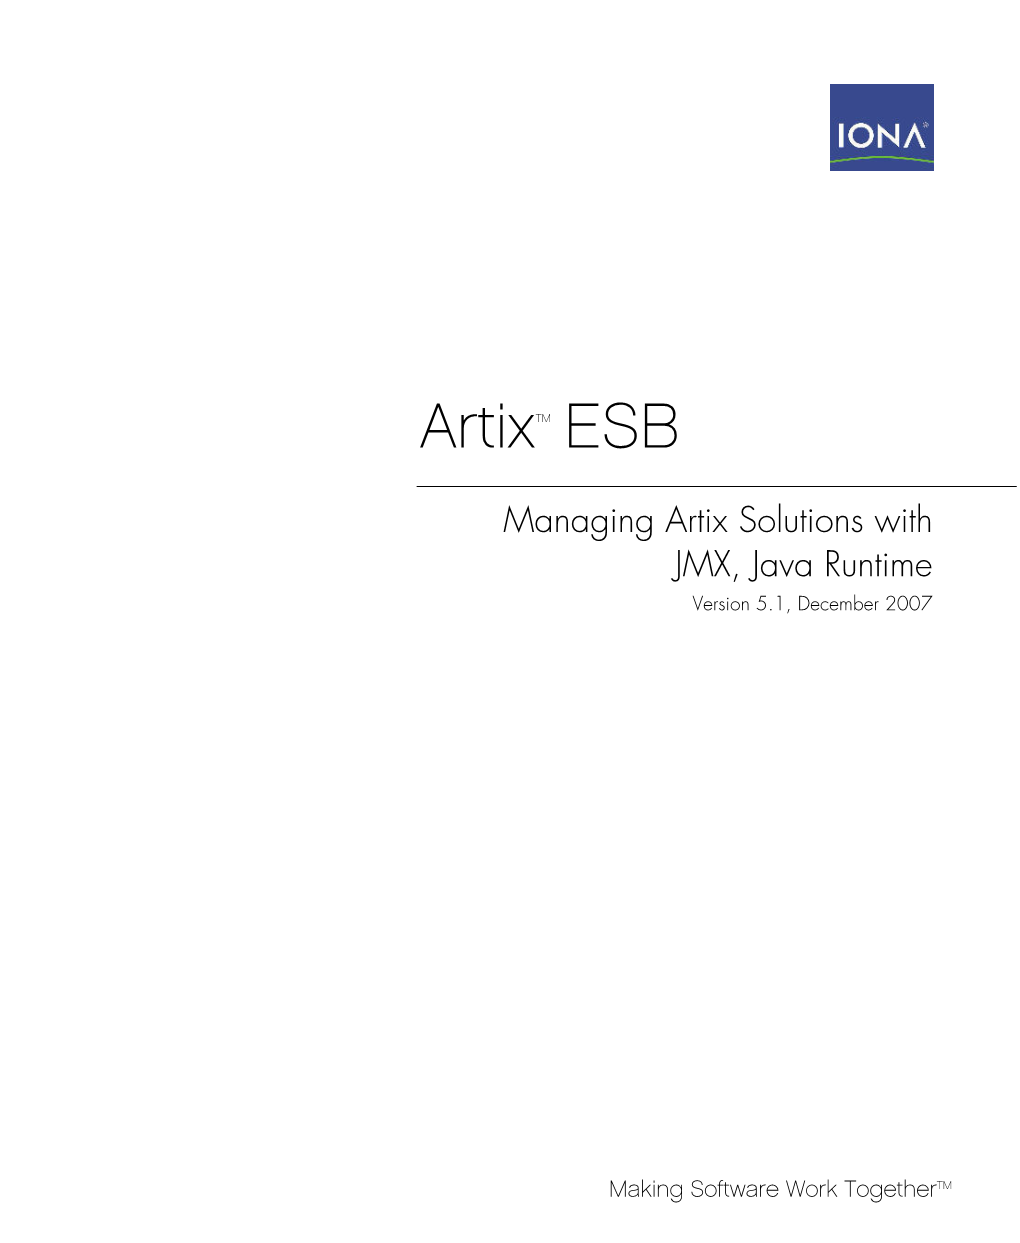 Managing Artix Solutions with JMX, Java Runtime Version 5.1, December 2007